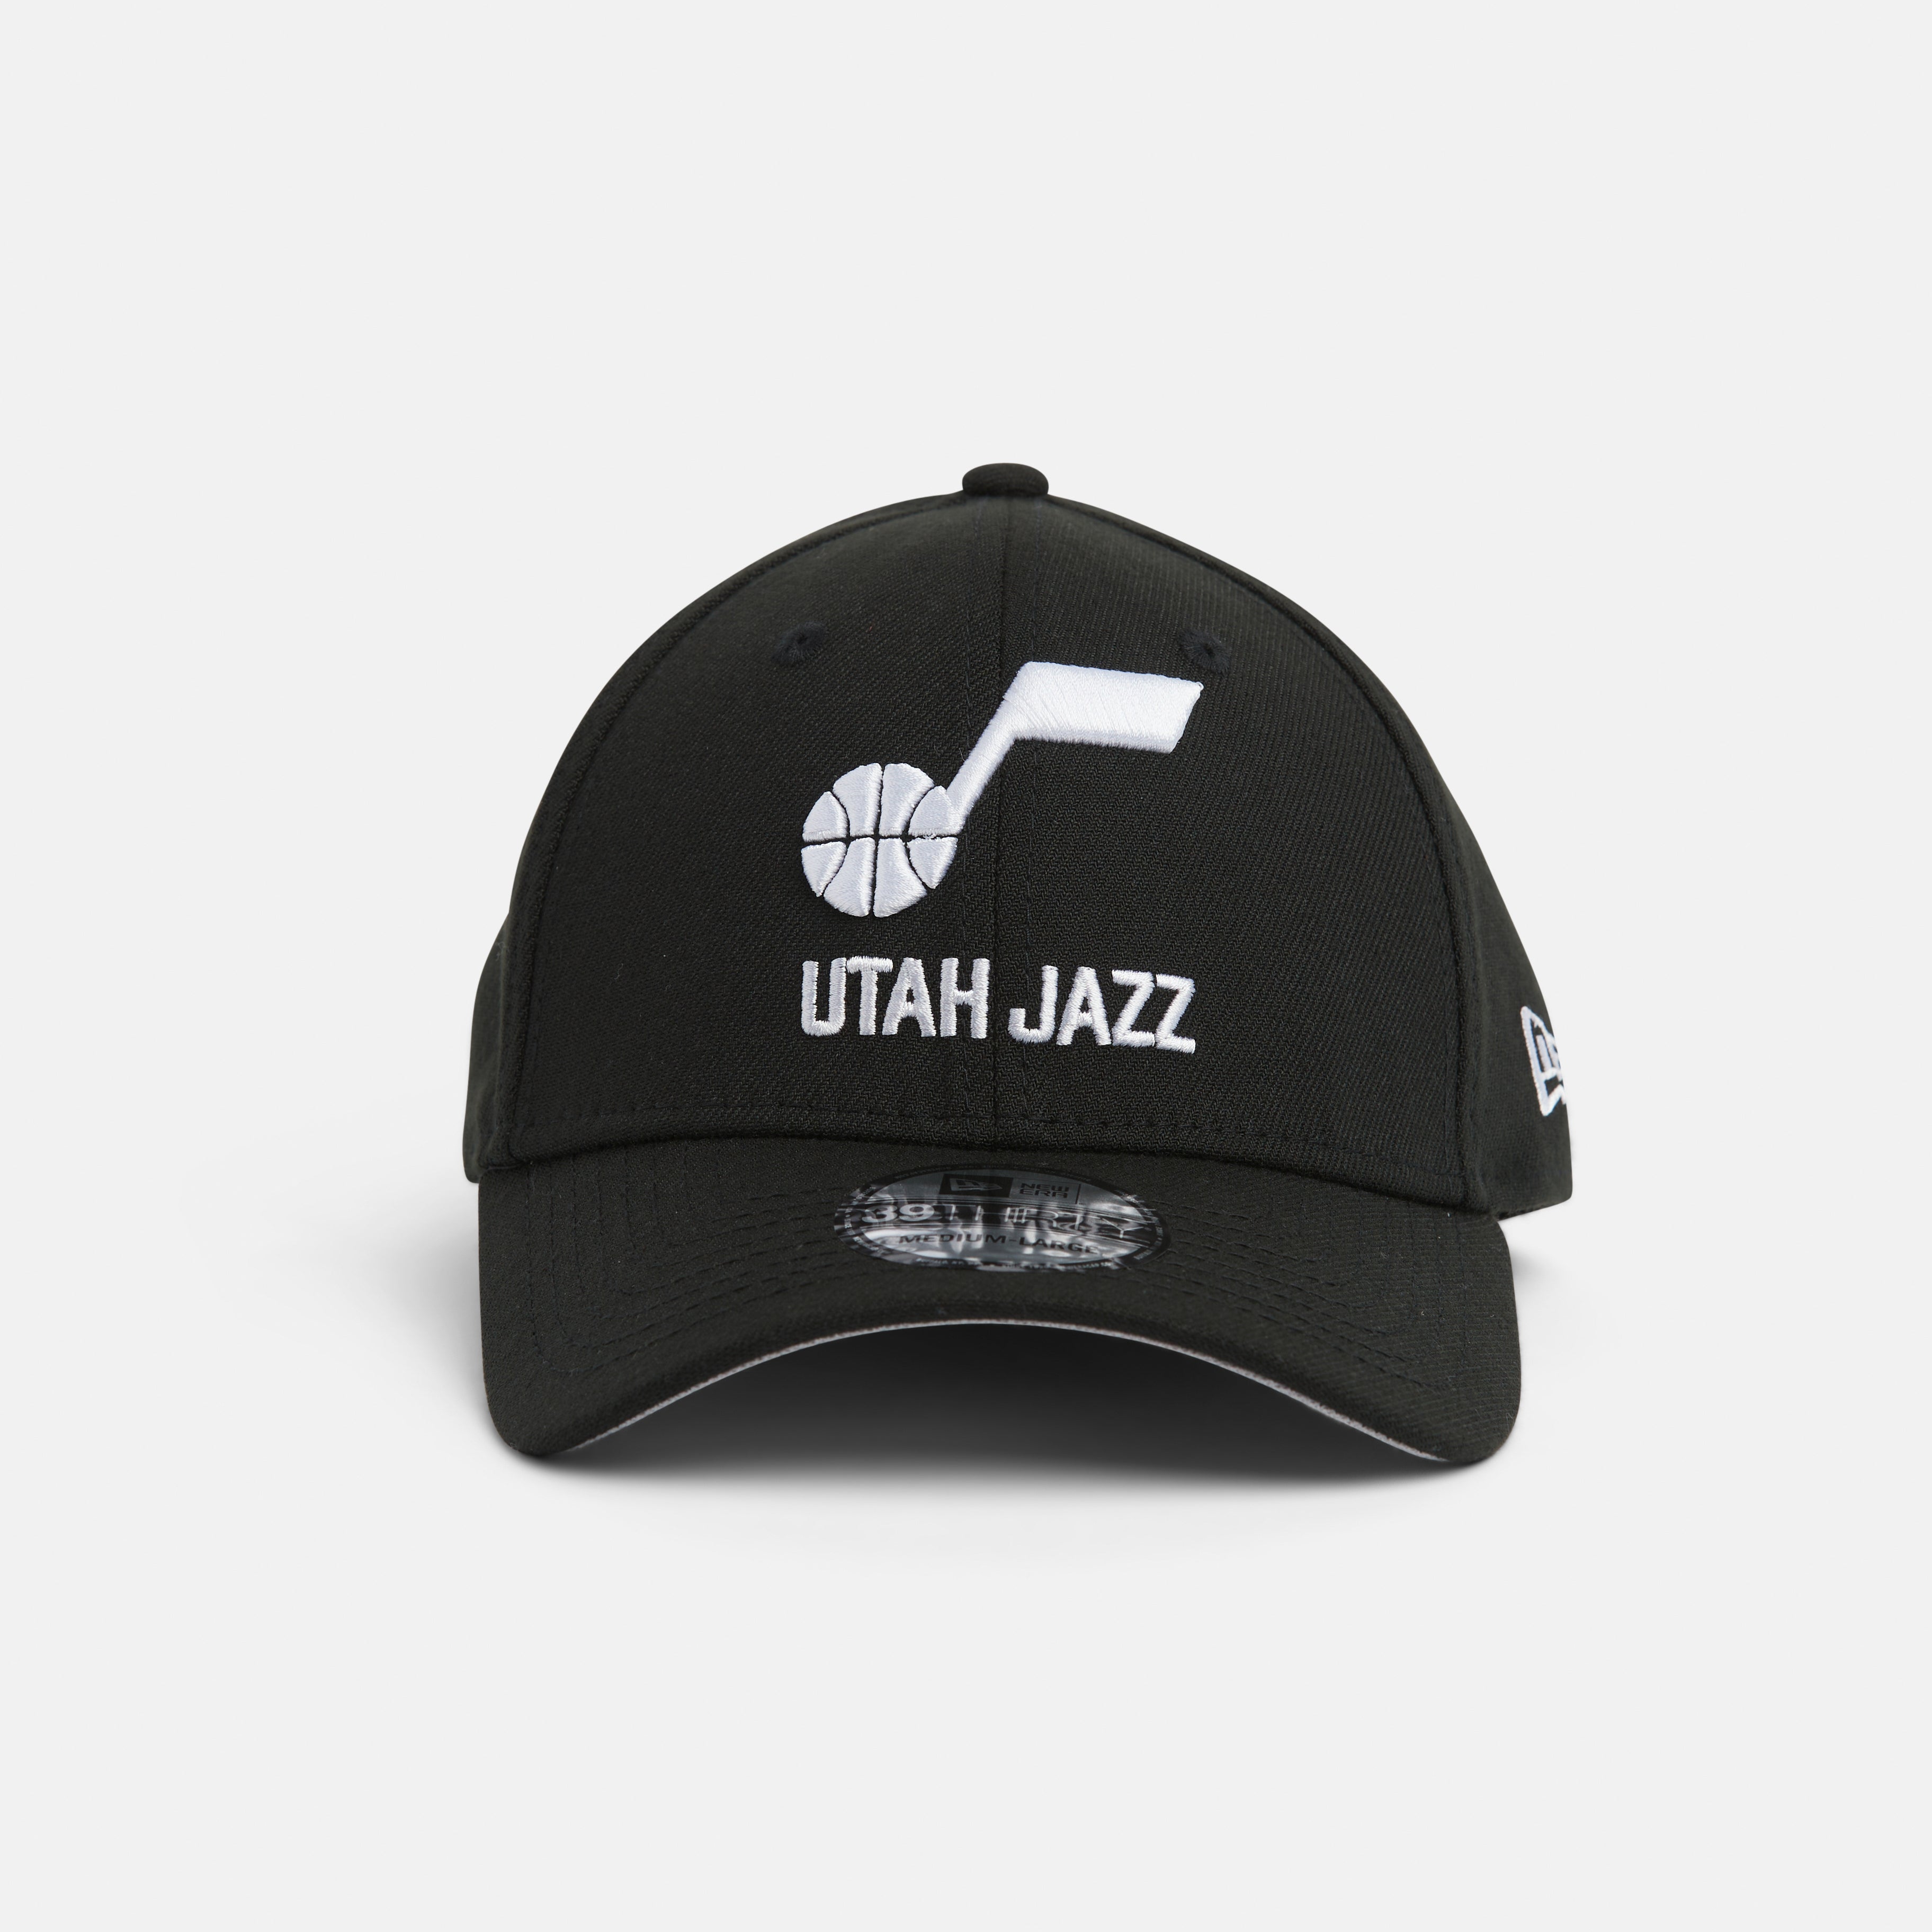 Front black 3930 with white not and Utah Jazz wordmark logo.